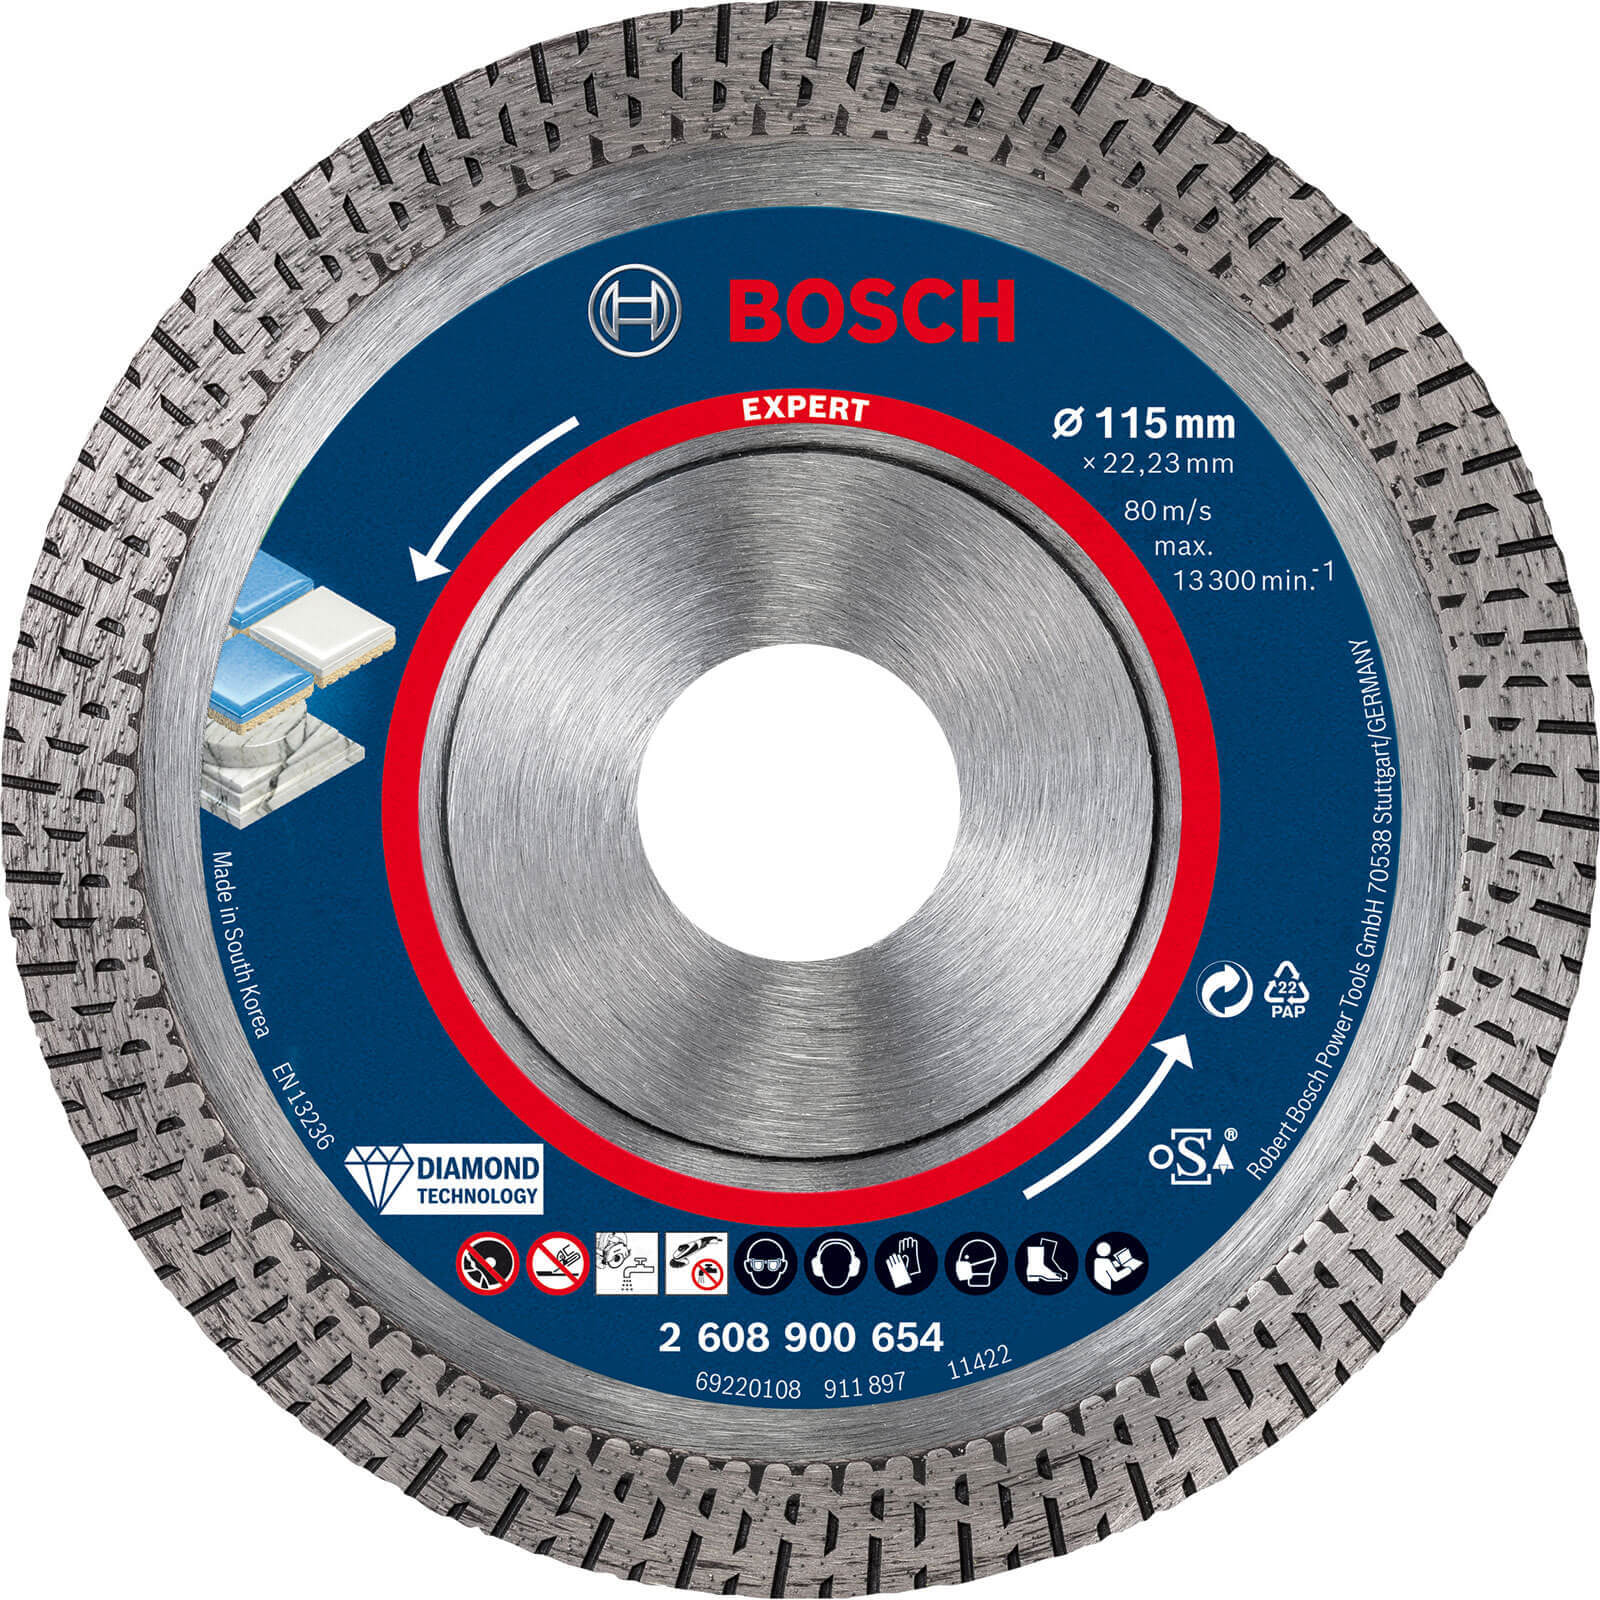 Bosch Expert Hard Ceramic Diamond Cutting Disc 115mm 1.4mm 22mm